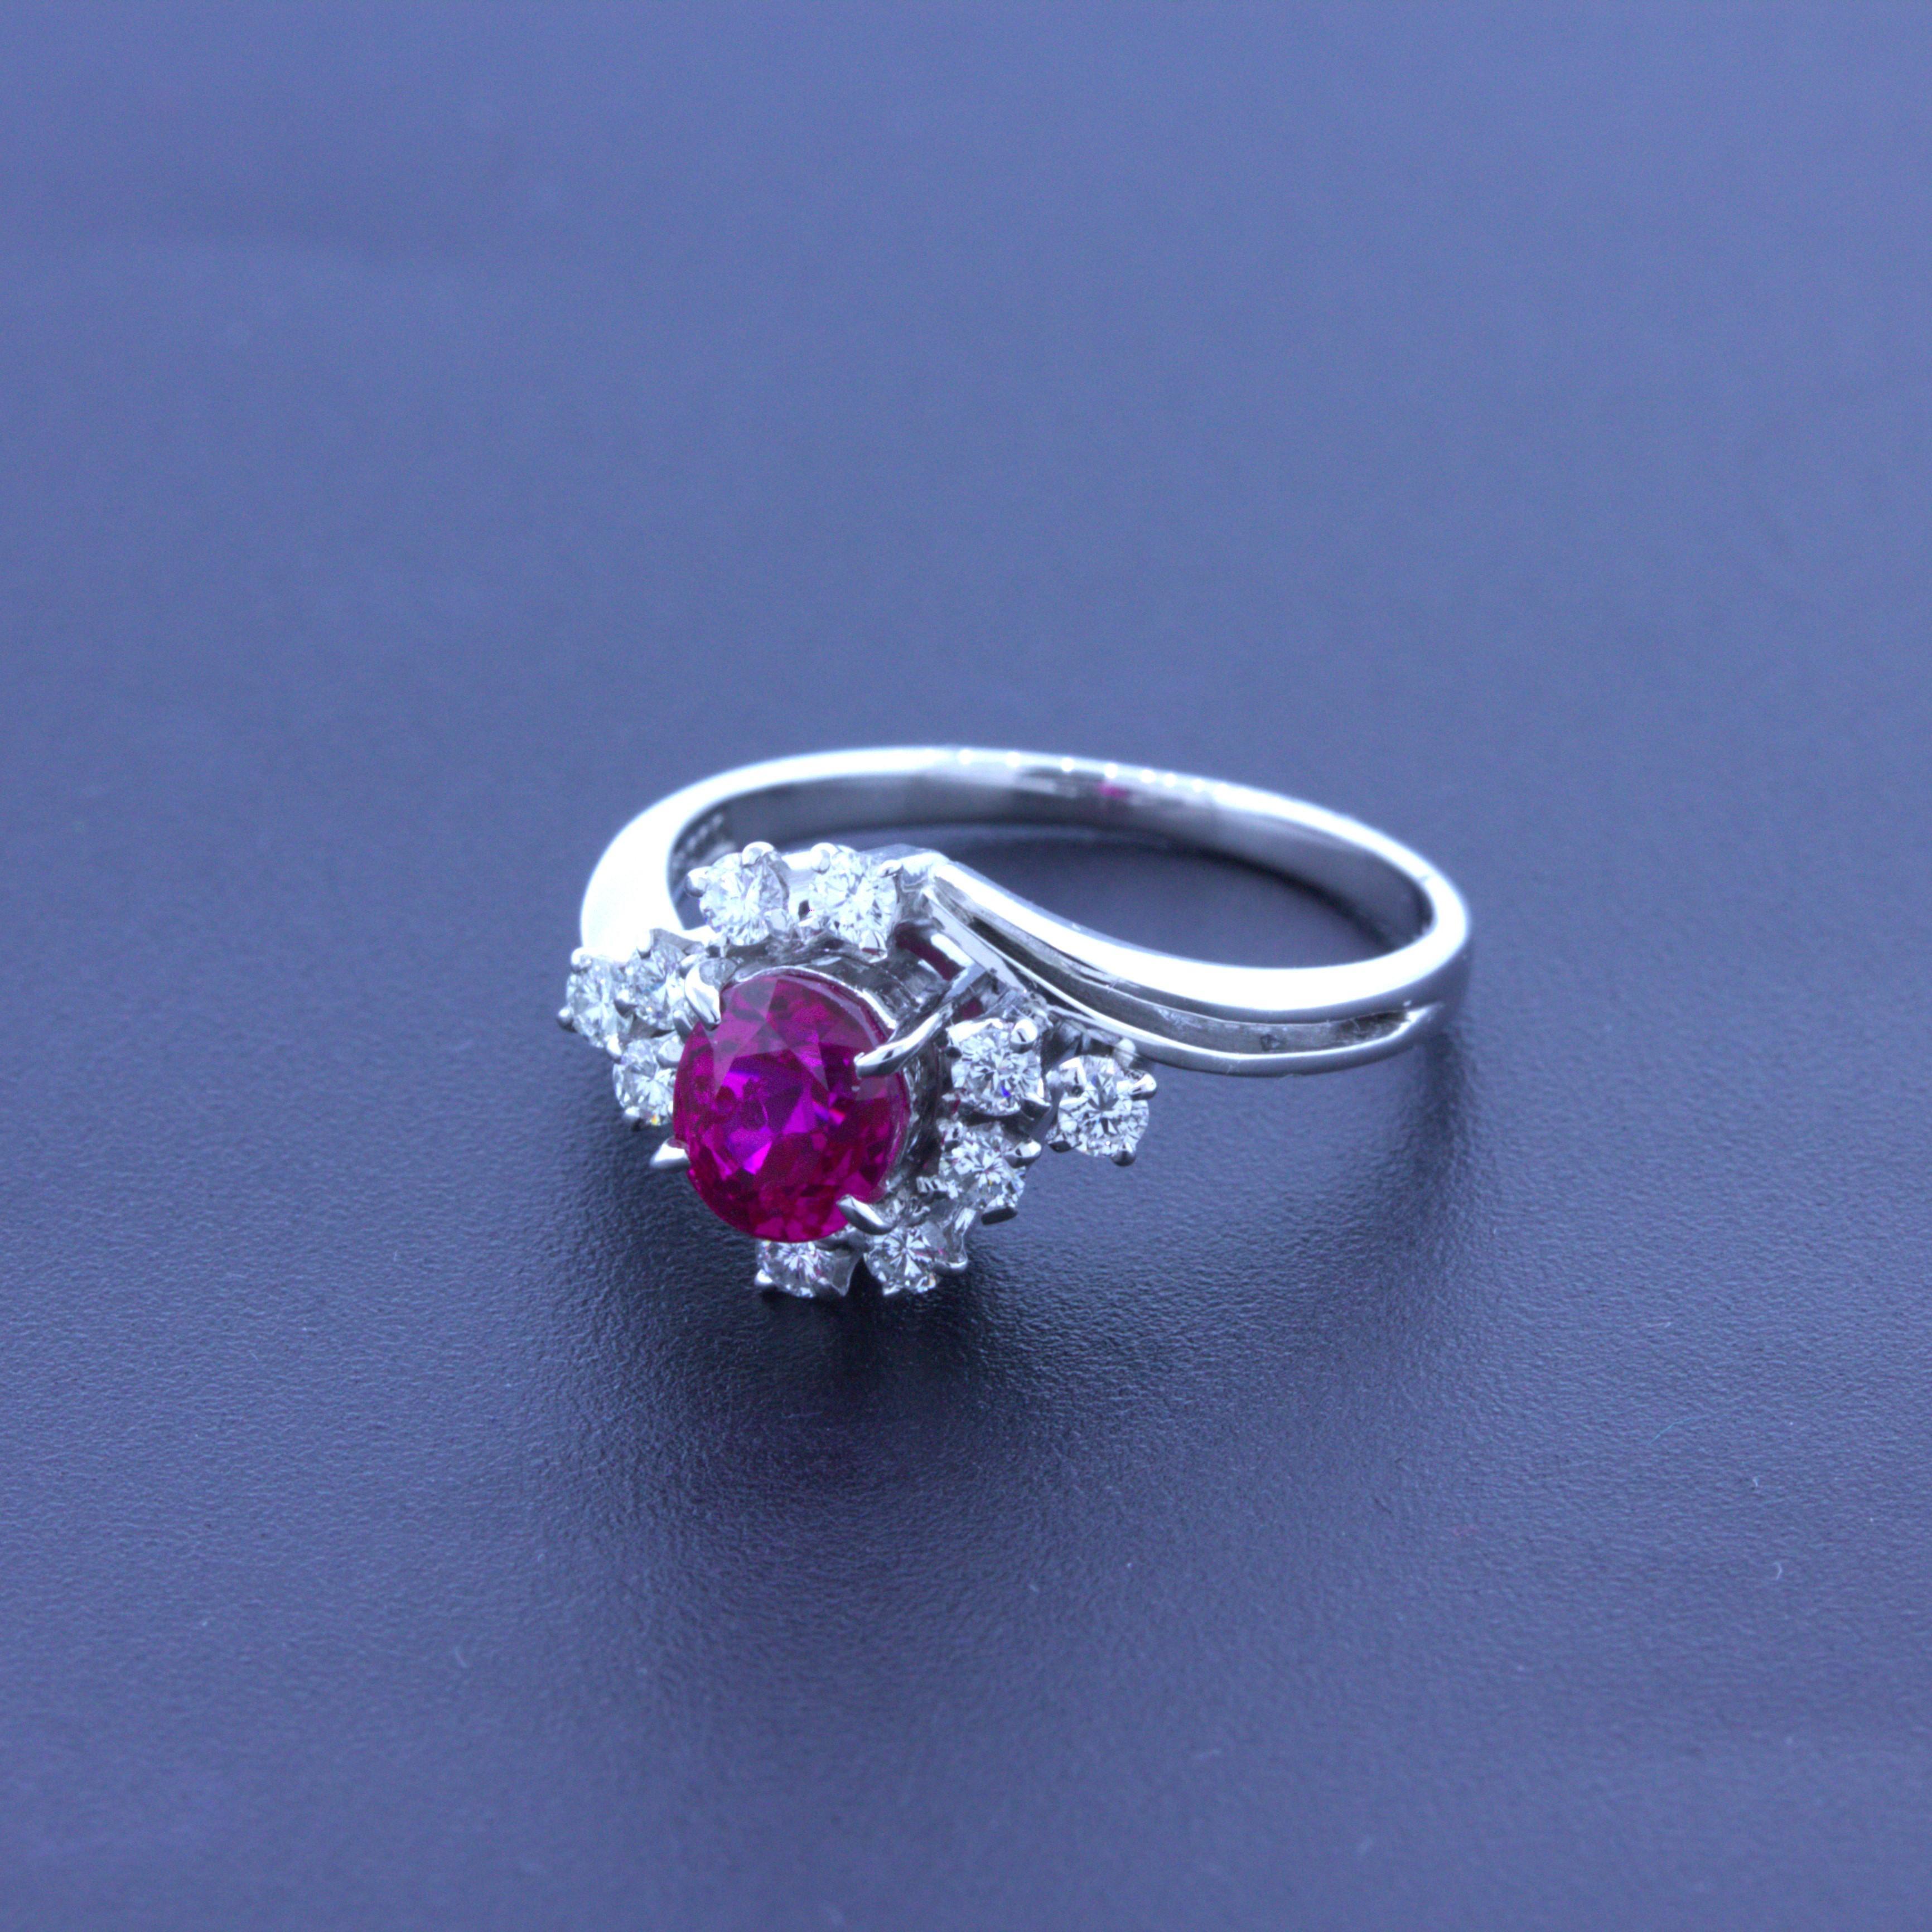 Oval Cut Superb 1.01 Carat Ho-Heat Burmese Ruby Diamond Platinum Ring, GIA Certified For Sale